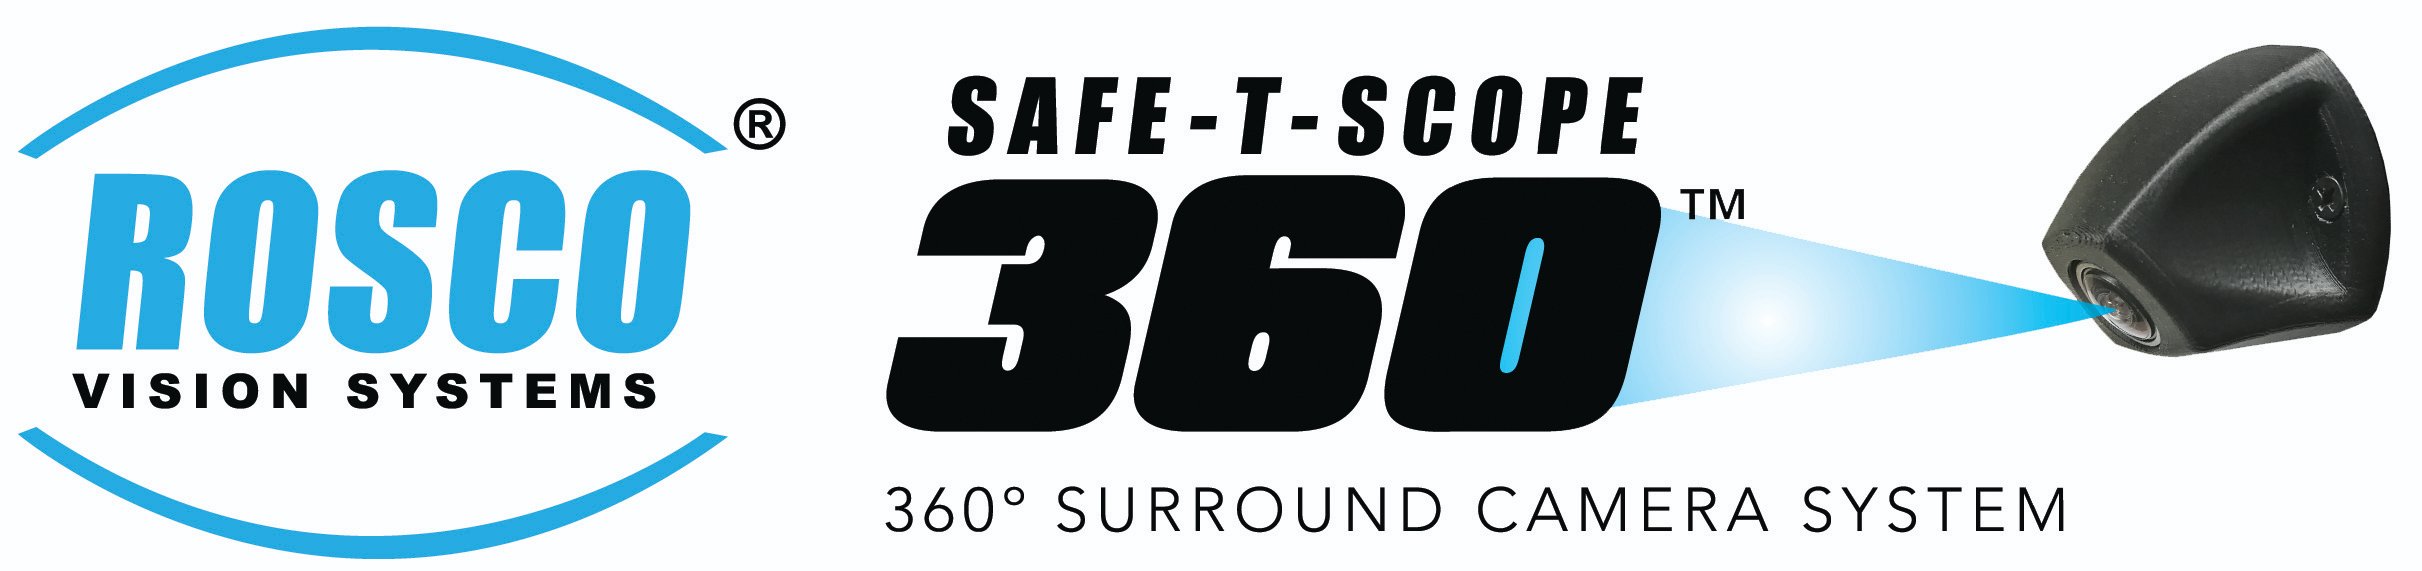 Safe-T-Scope 360™ Surround Camera System 